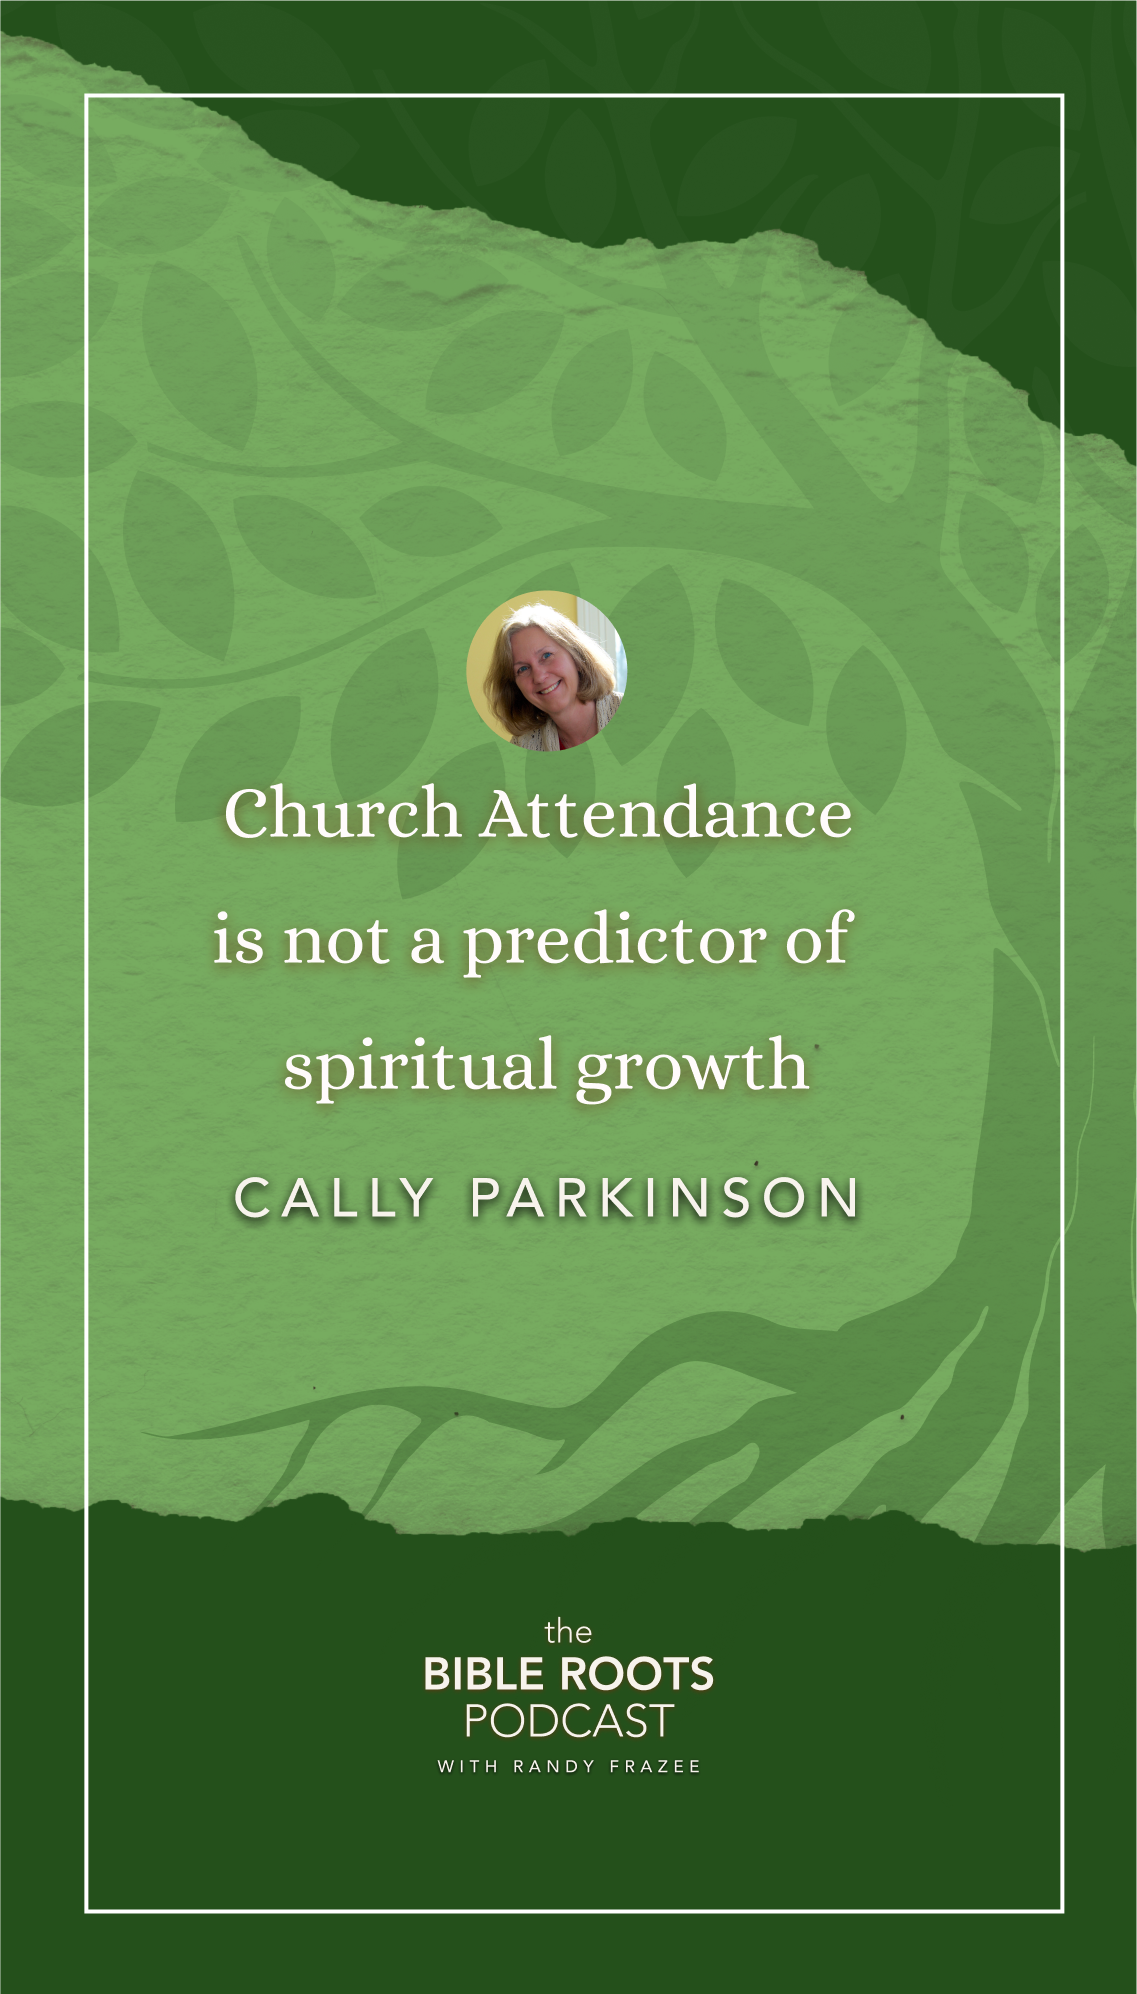 "Church Attendance is not a predictor of spiritual growth